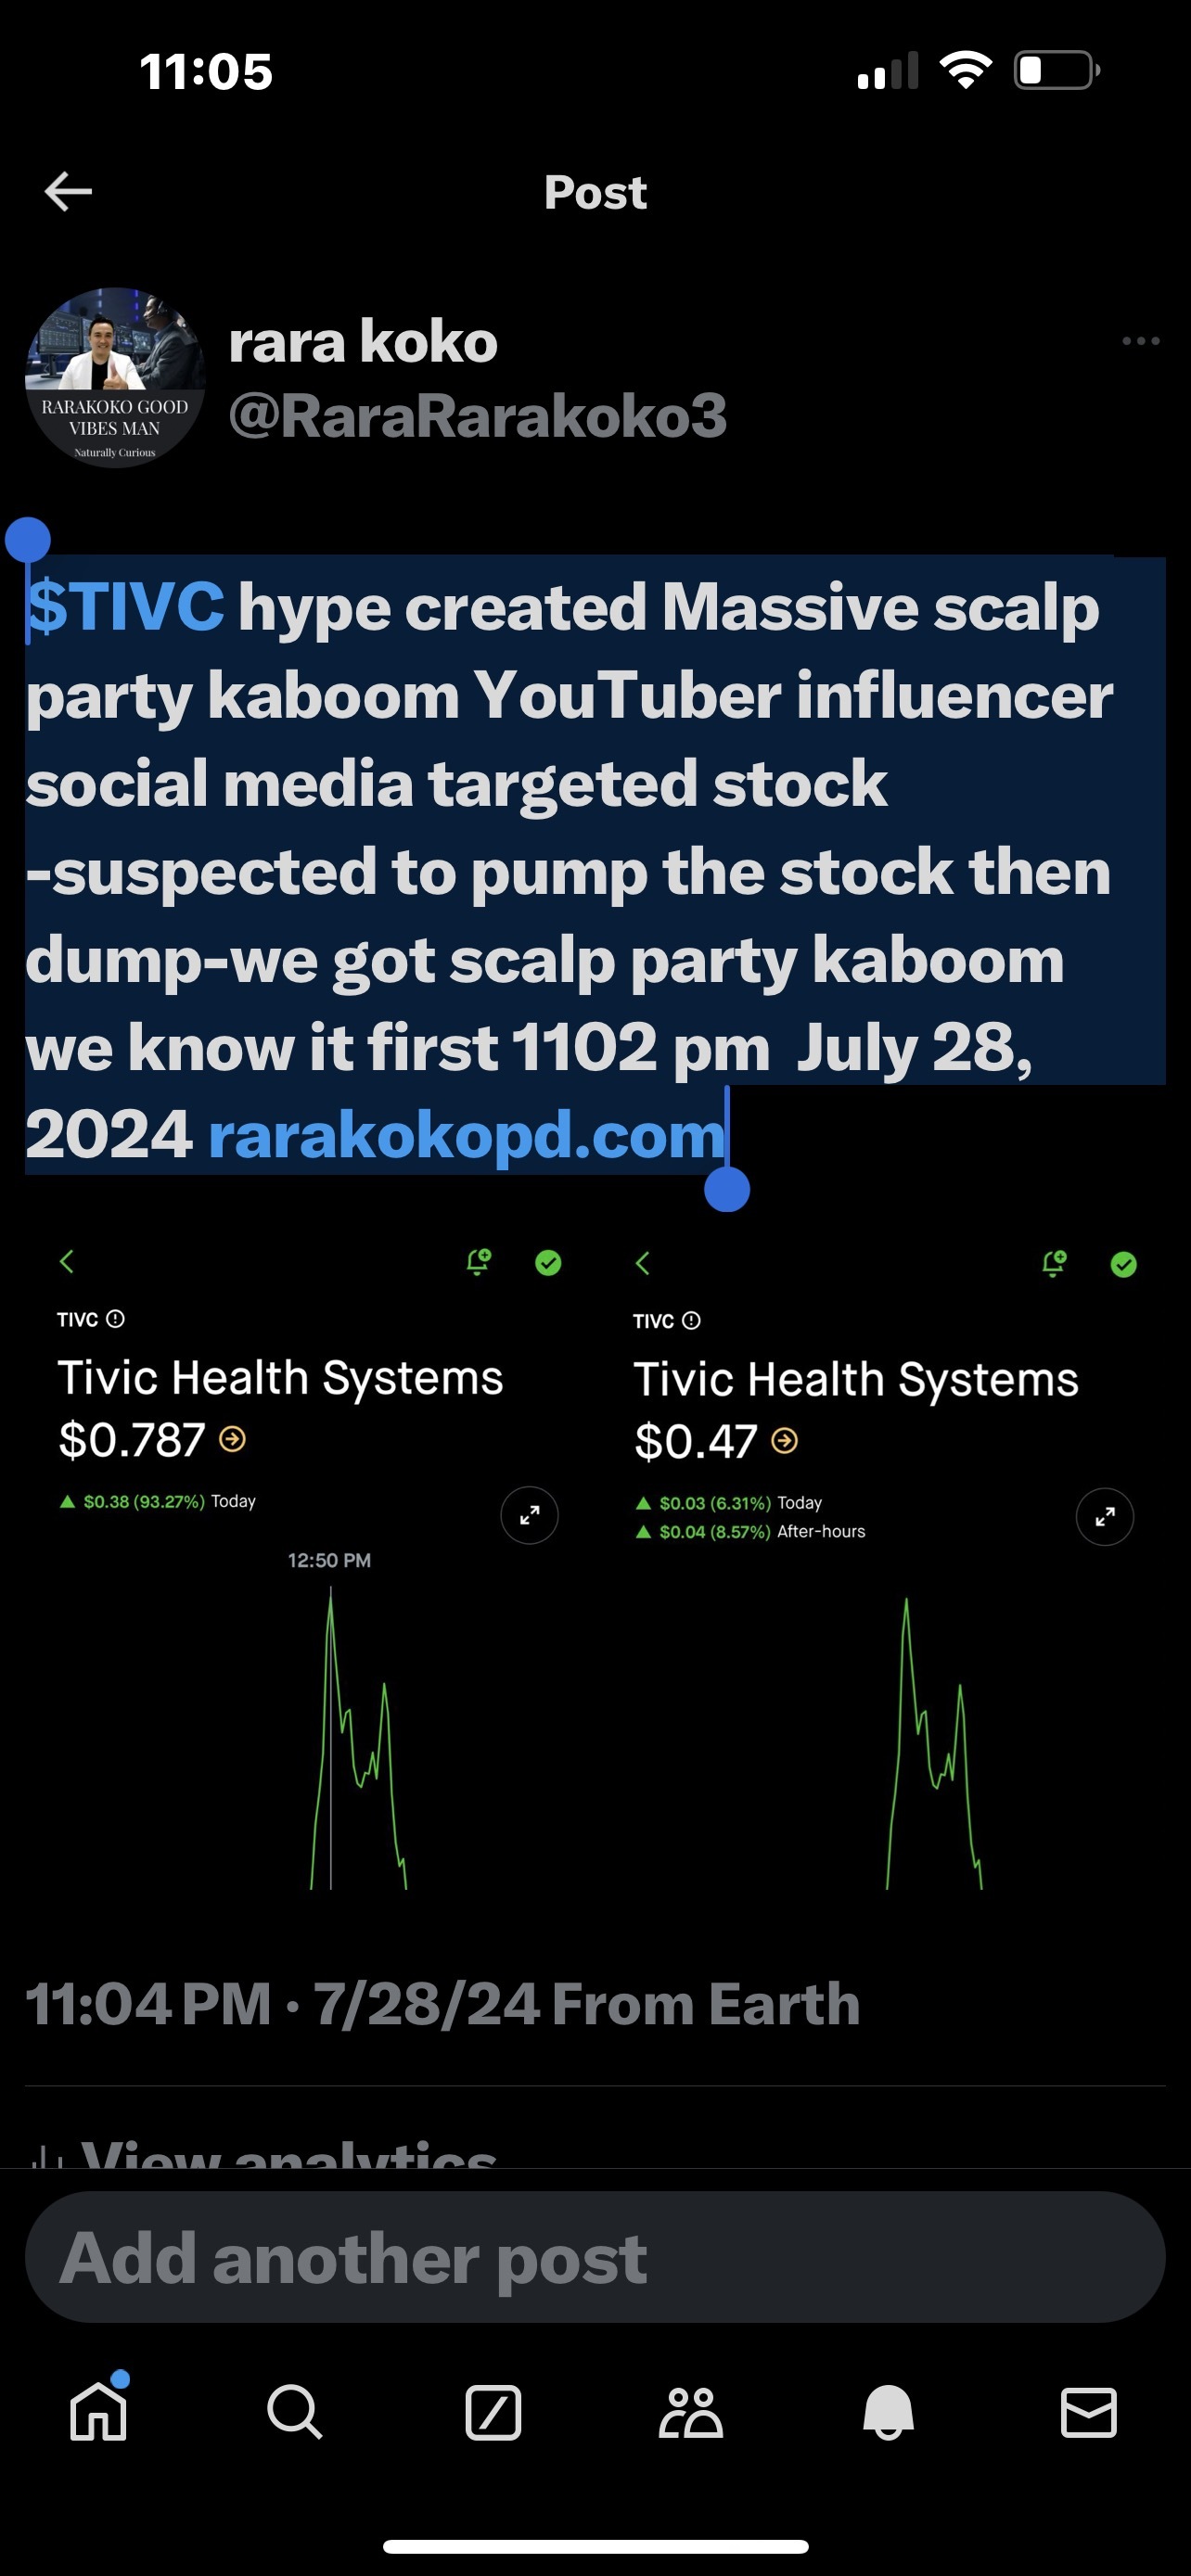 $TIVC 廣播創造了巨大頭皮派對卡布姆 YouTube 用戶網絡影響者社交媒體定位股票--懷疑能夠幫助推進股票，然後丟棄-我們有頭皮派對象，我們知道這一點我們第一點 10 點 2 點 2024 年 7 月 28 日晚上